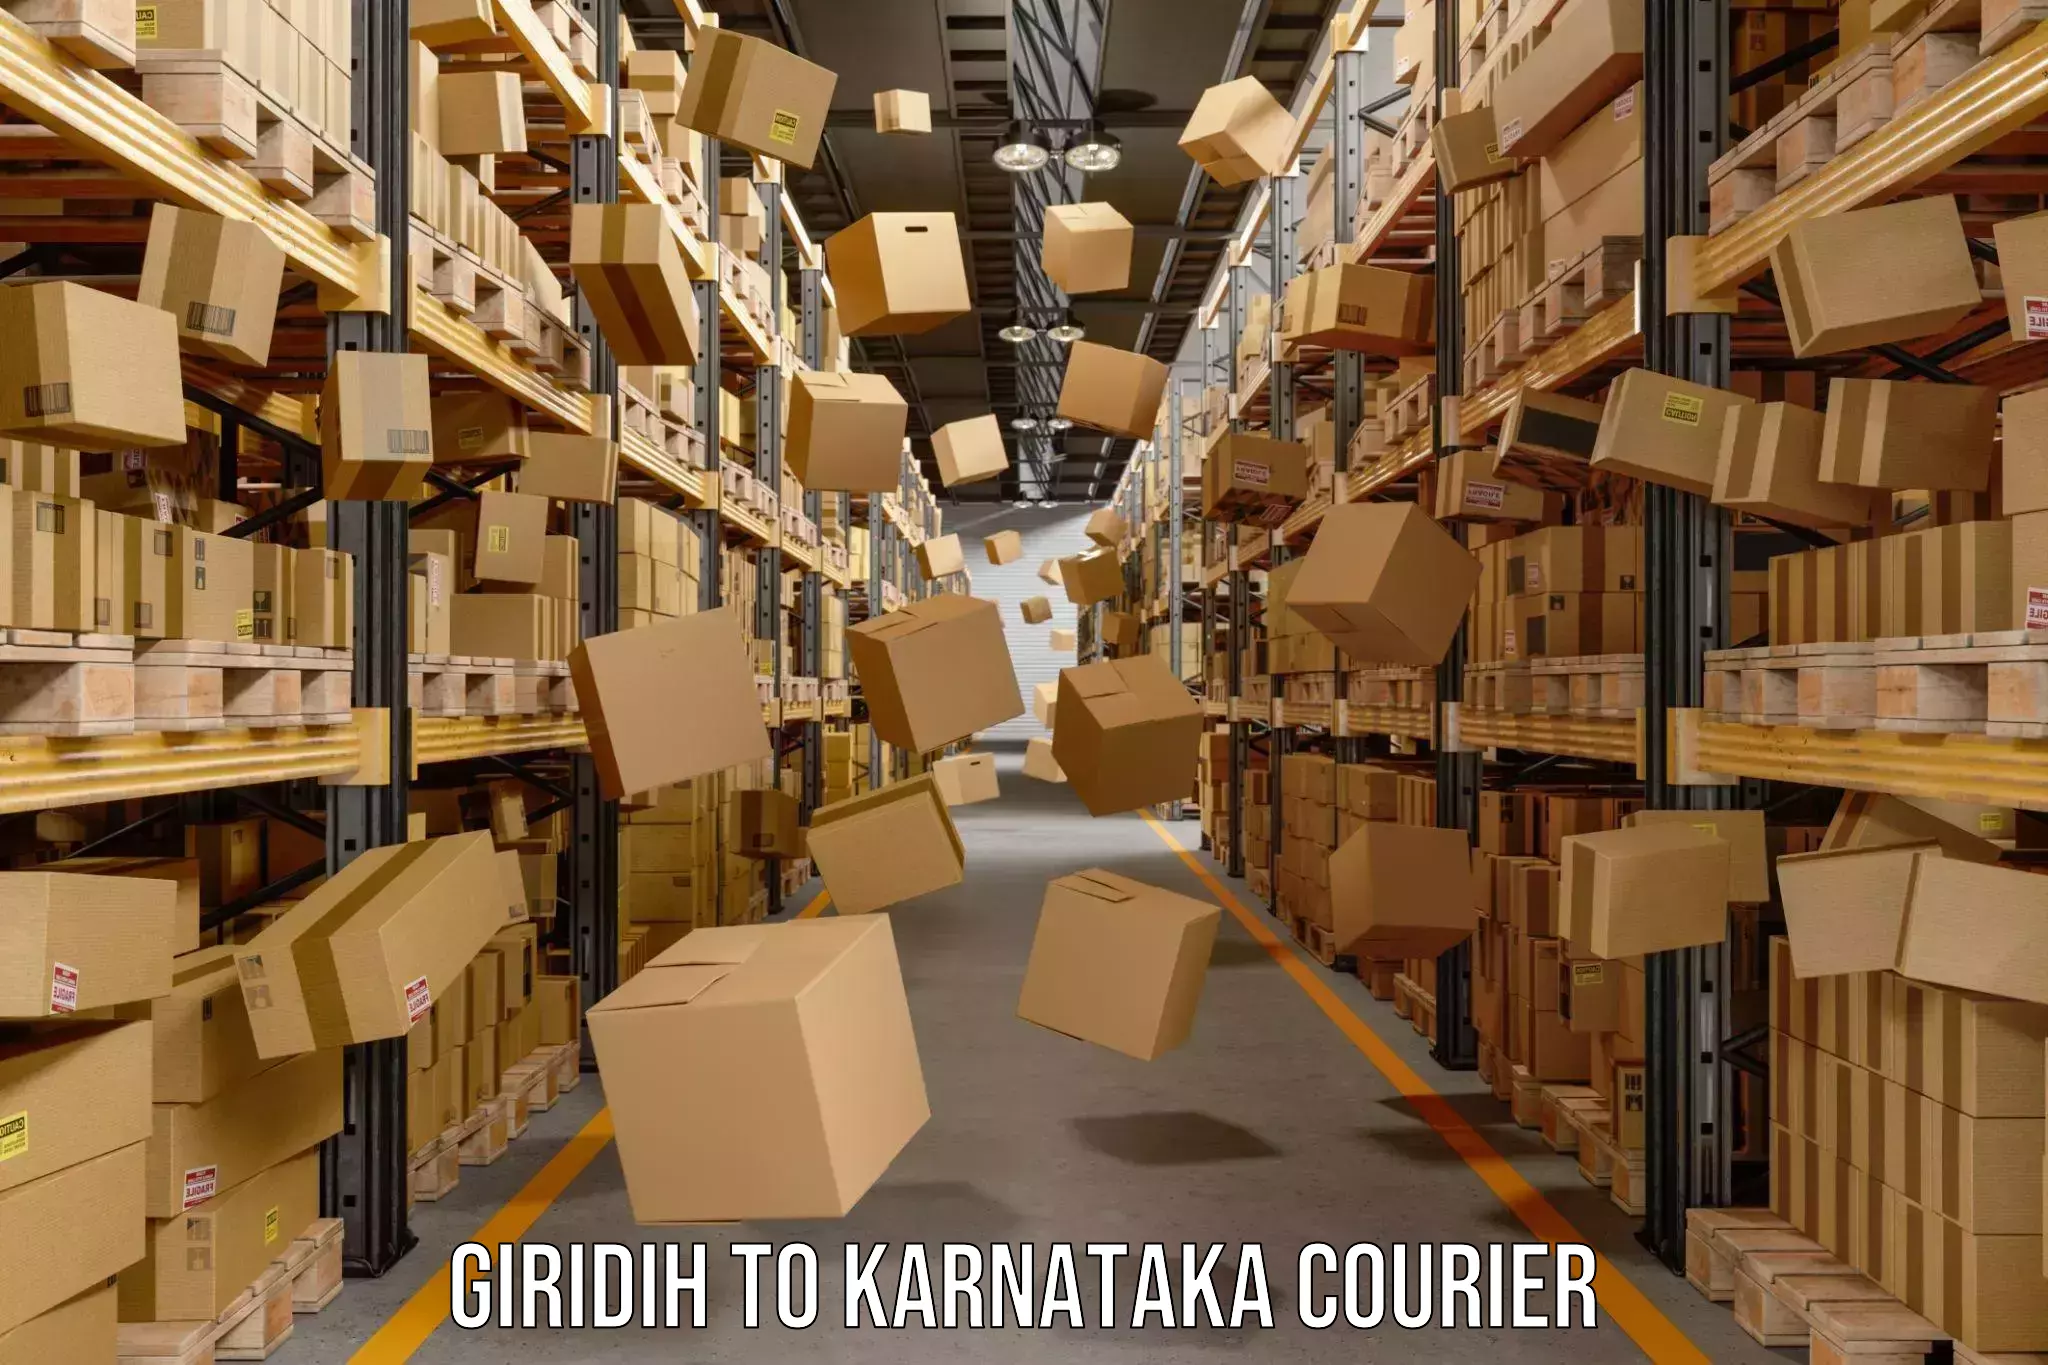 Package delivery network Giridih to Kanjarakatte